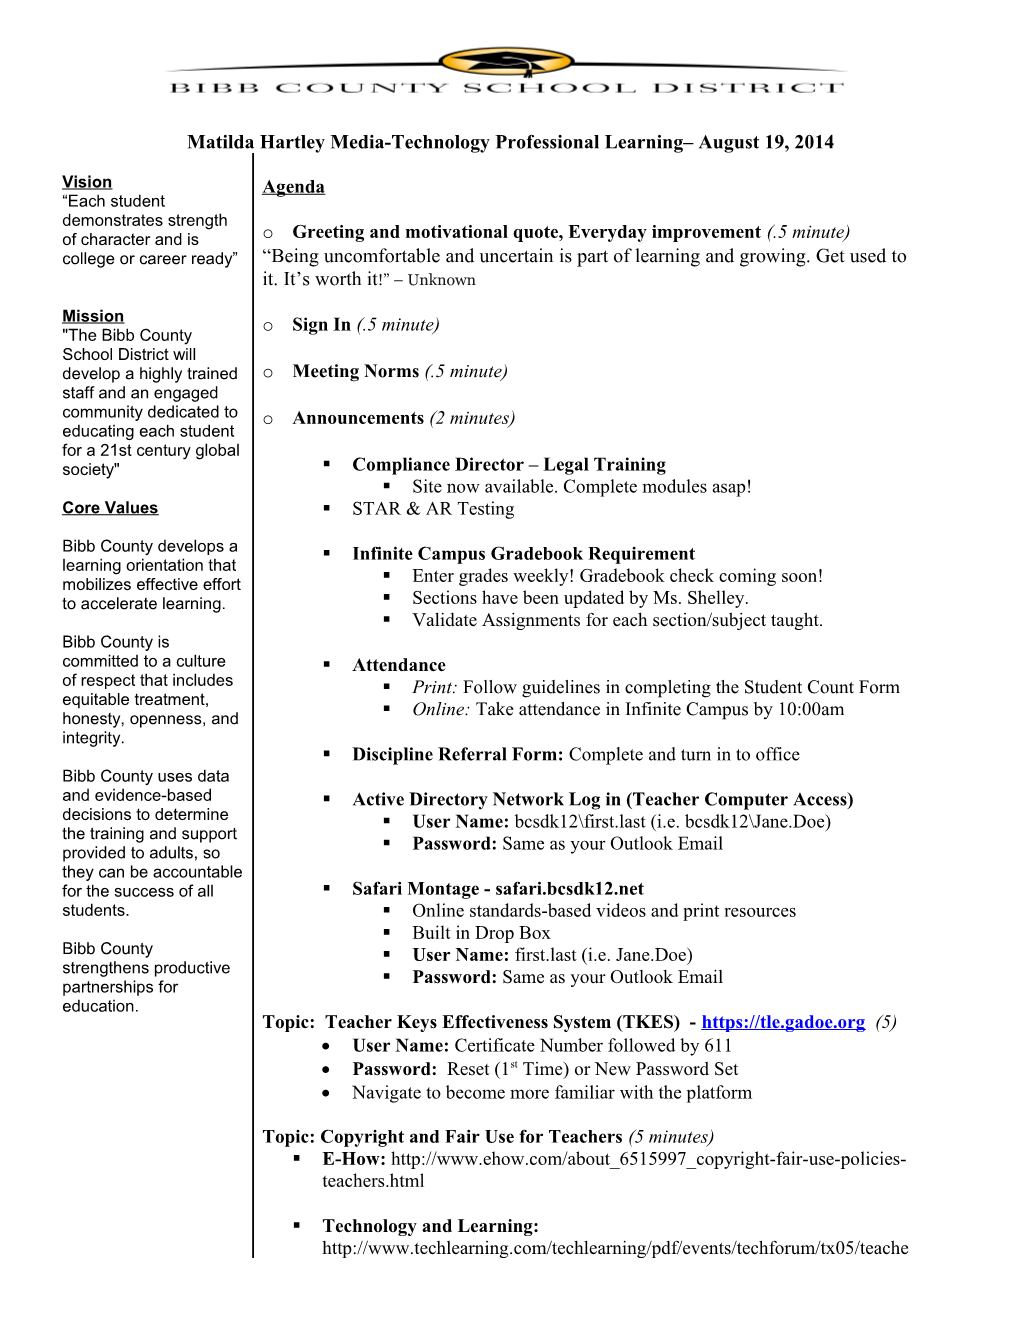 Matilda Hartley Media-Technology Professional Learning August 19, 2014